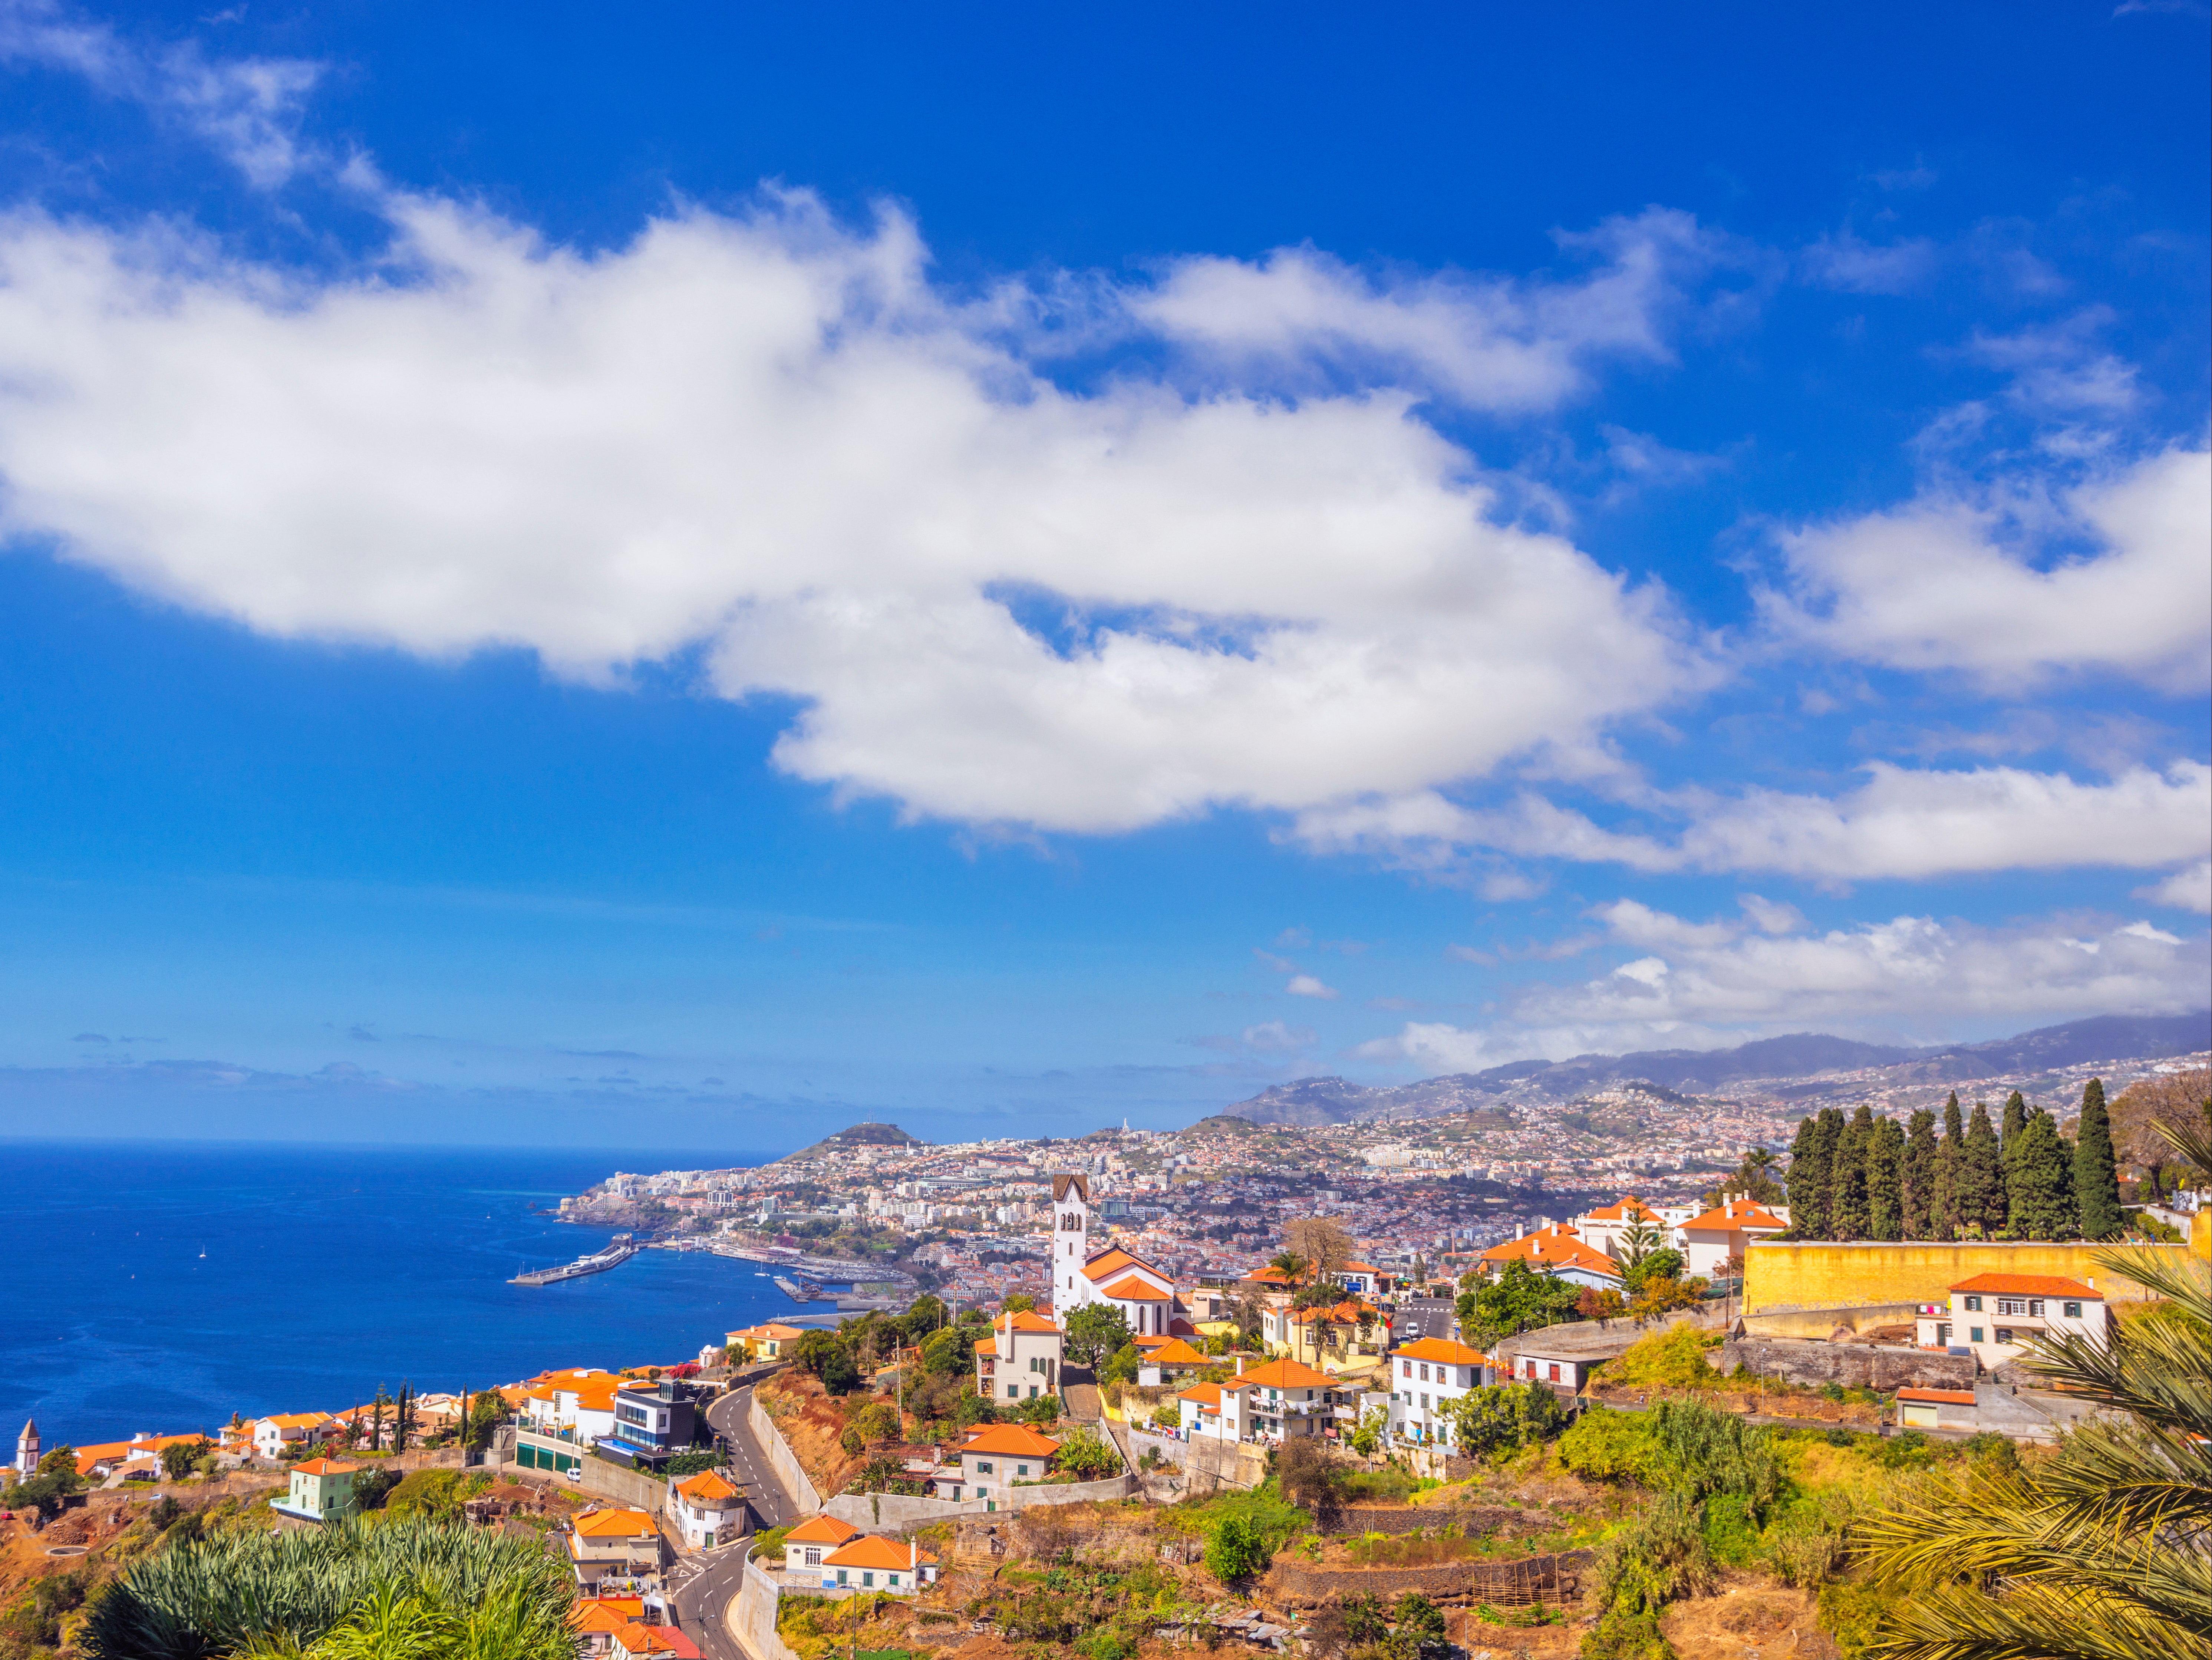 Madeira offers rugged terrain and warm seas